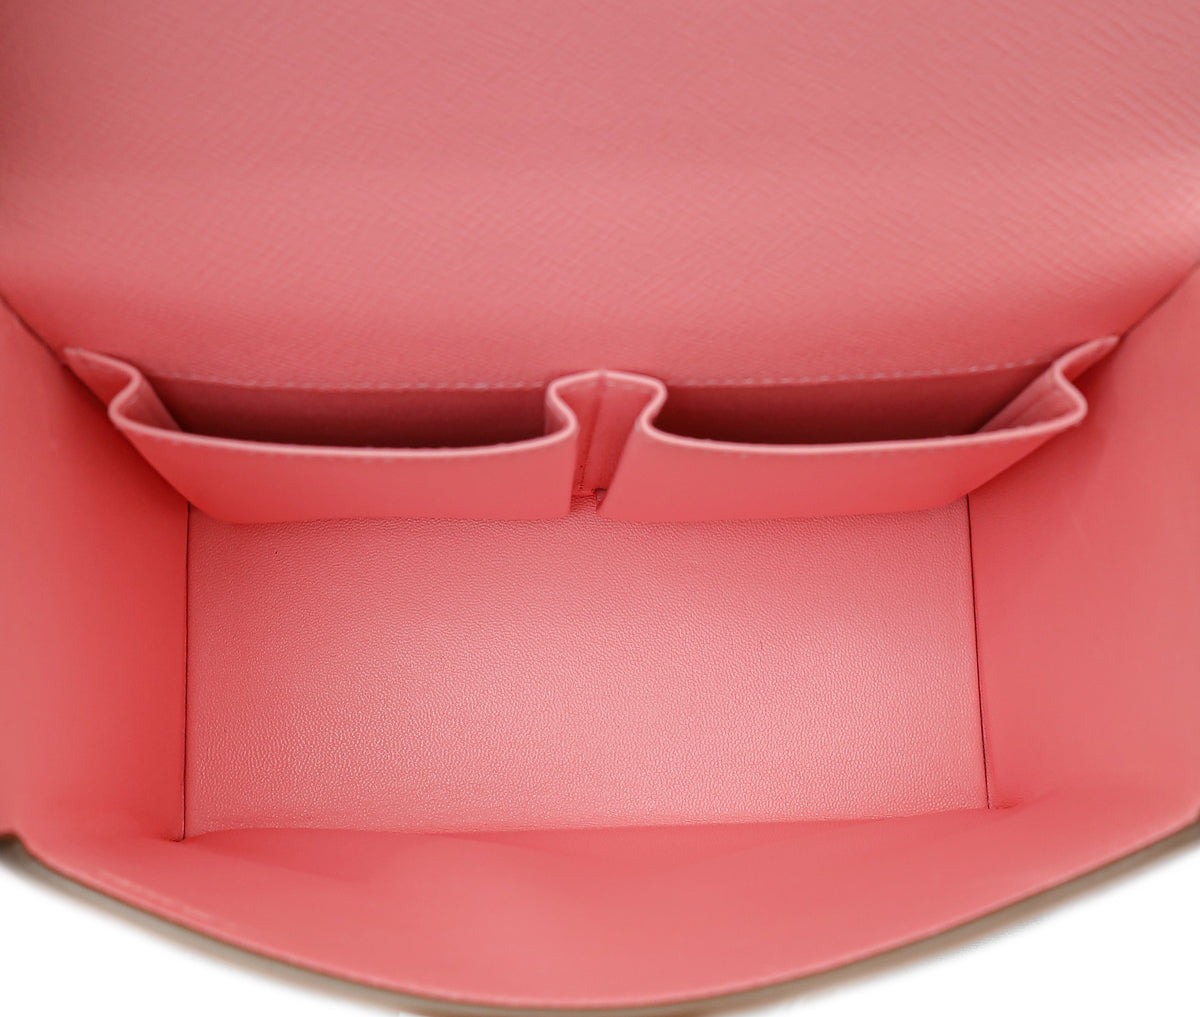 Hermes Rose Confetti Cinhetic Boxy Top Handle Bag